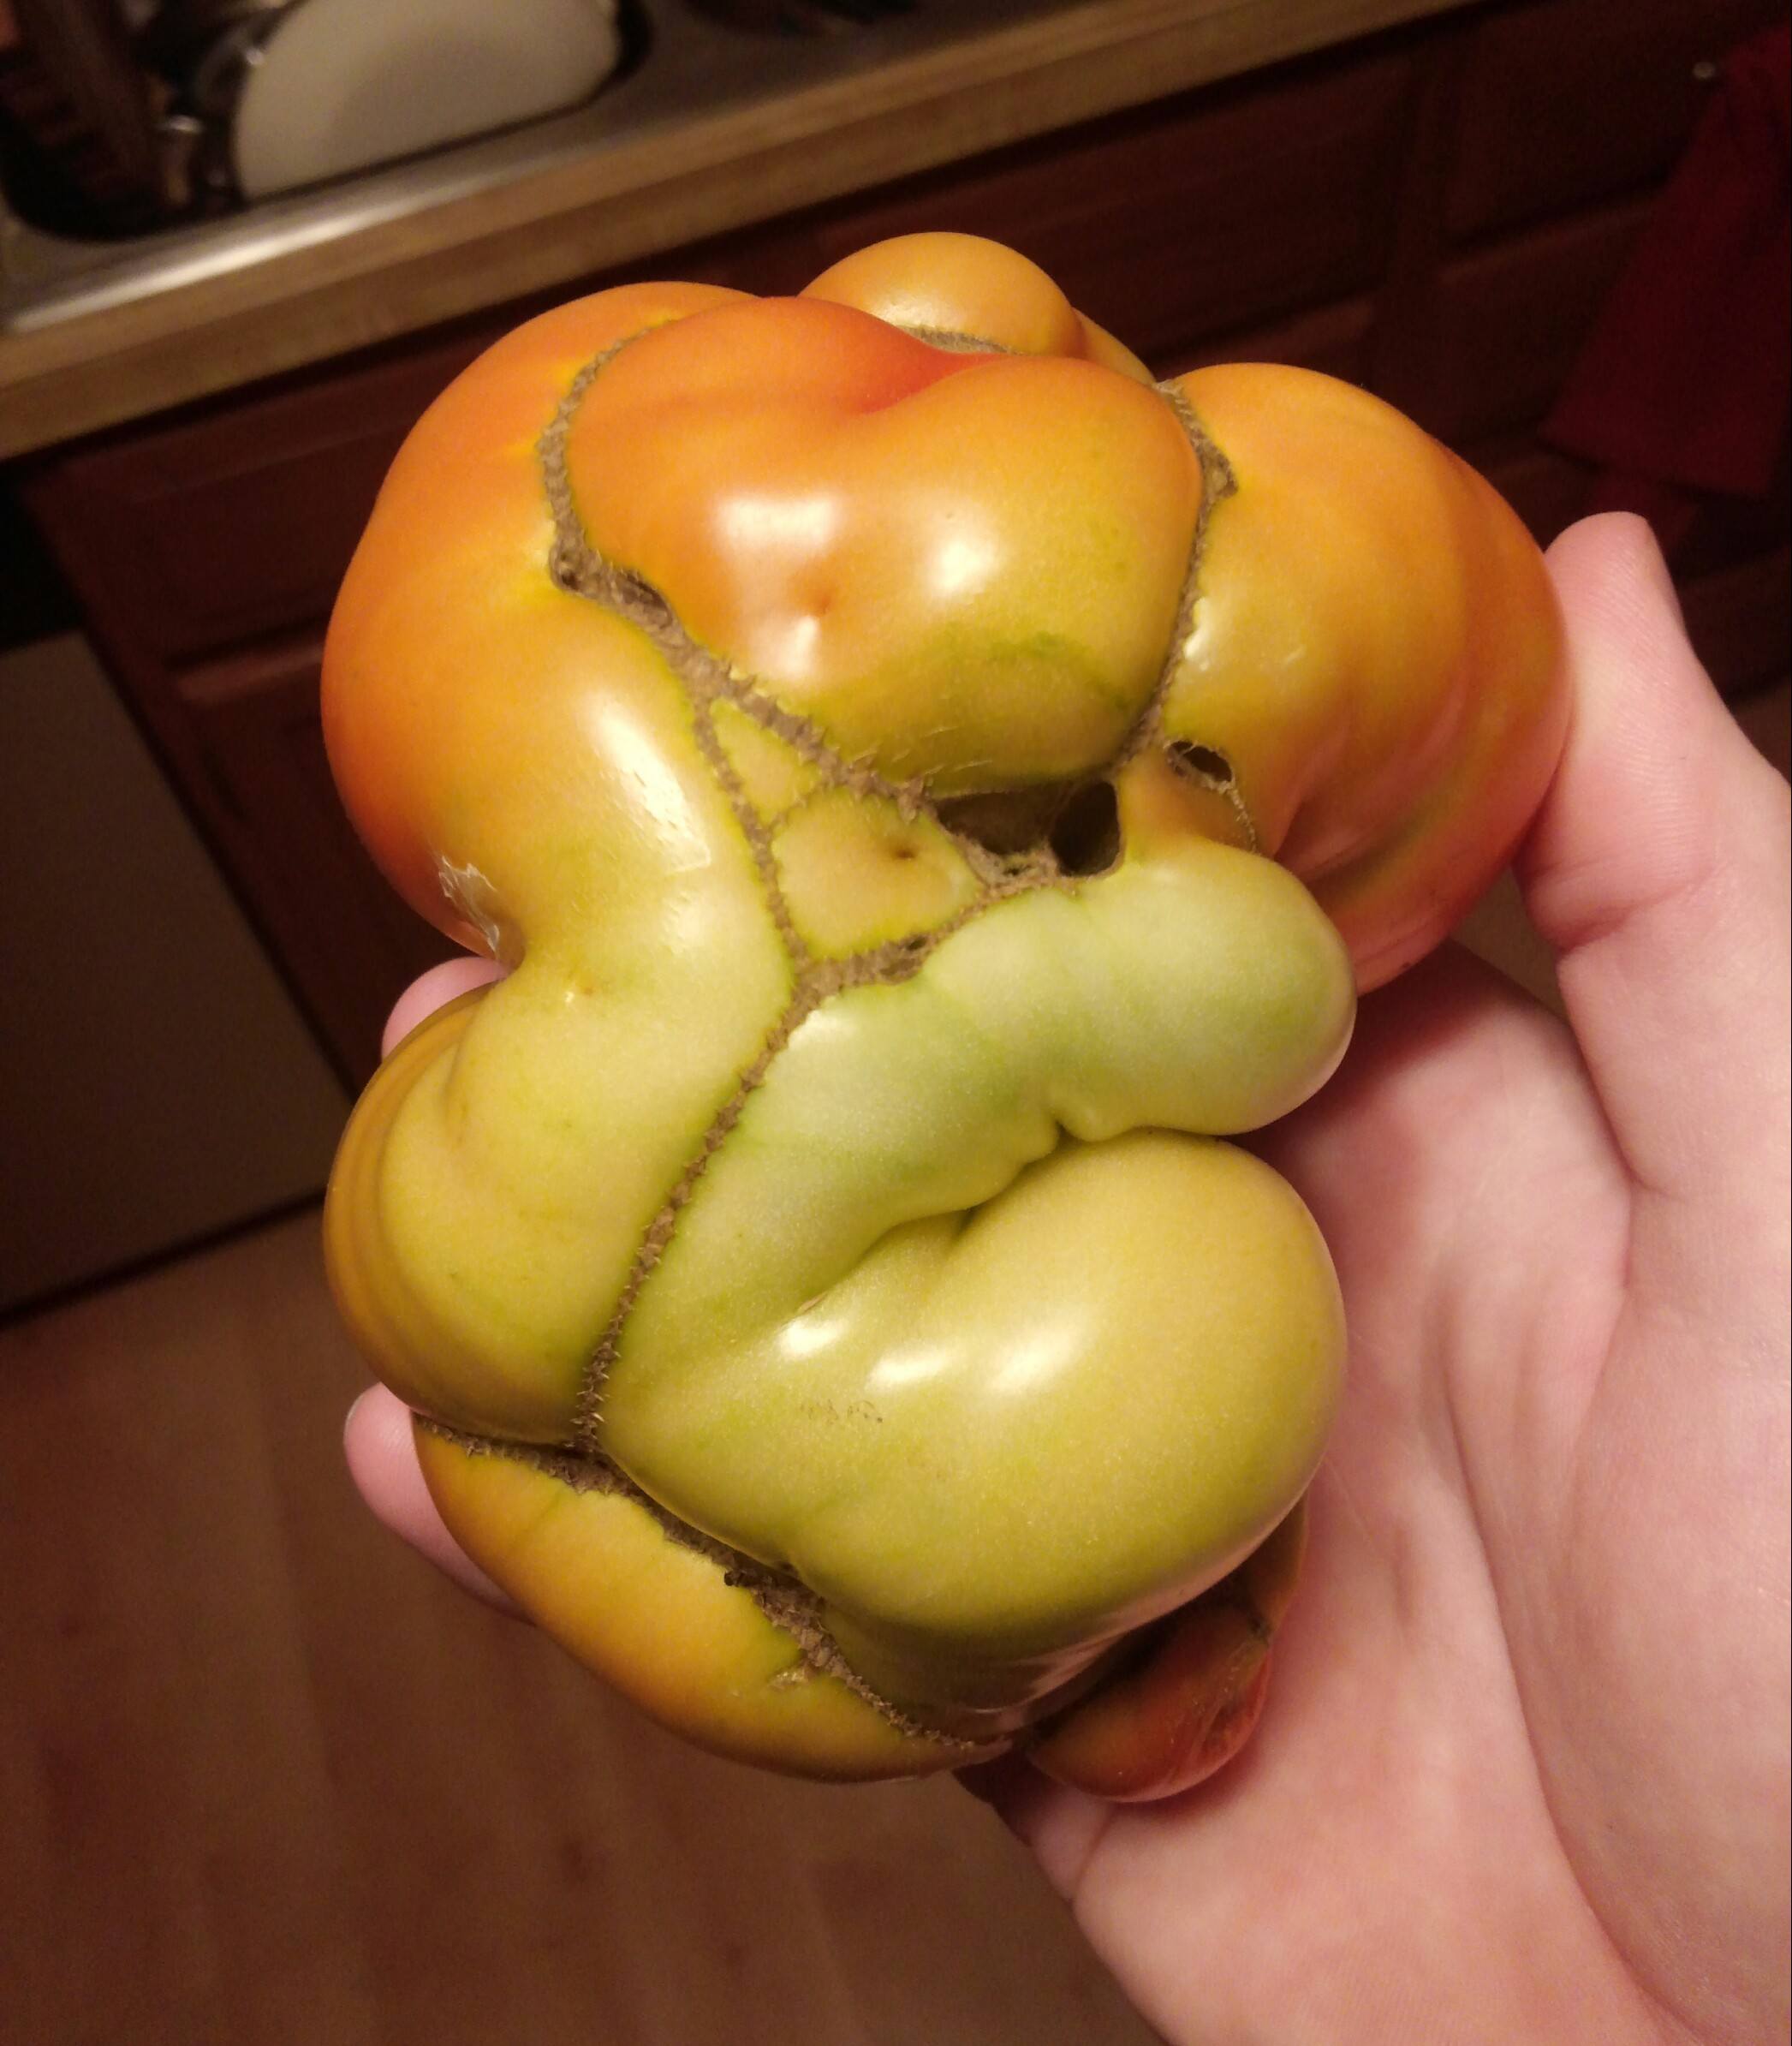 This mutant tomato